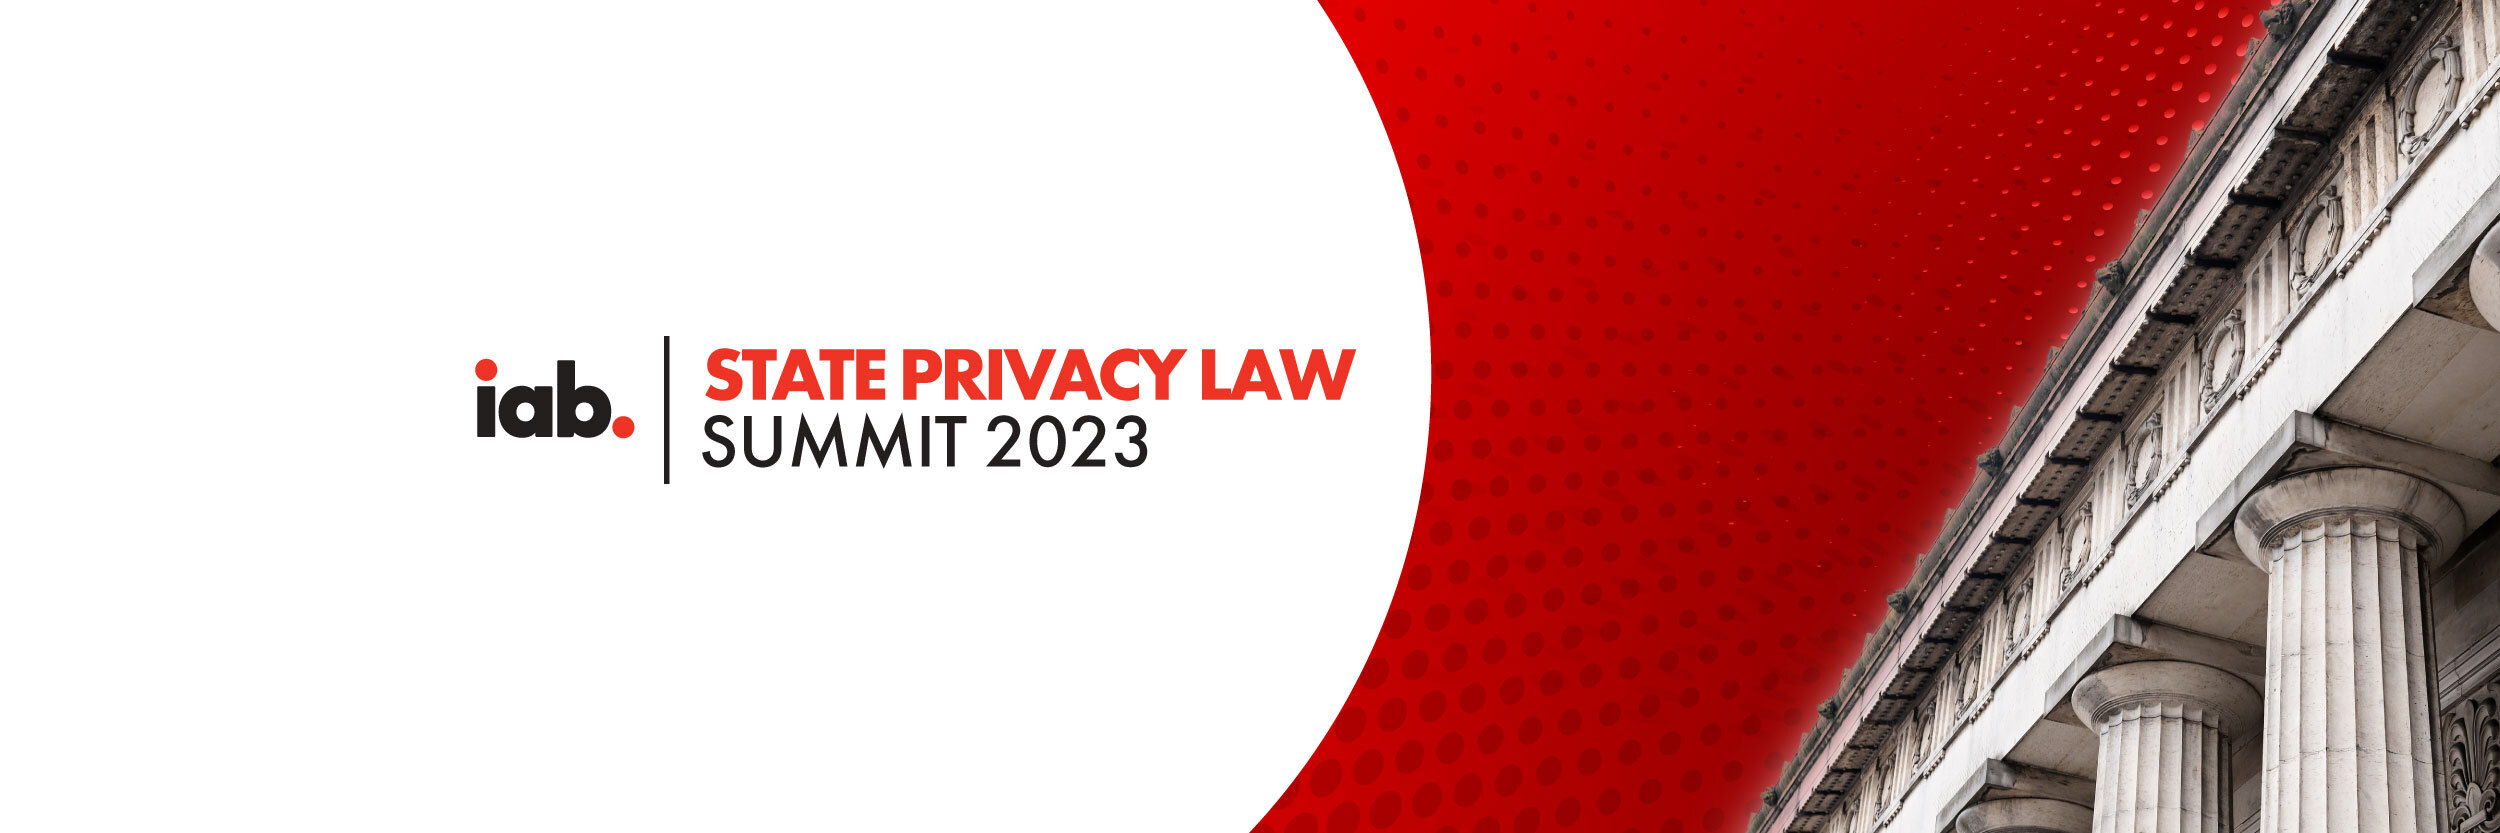 IAB State Privacy Law Summit 2023